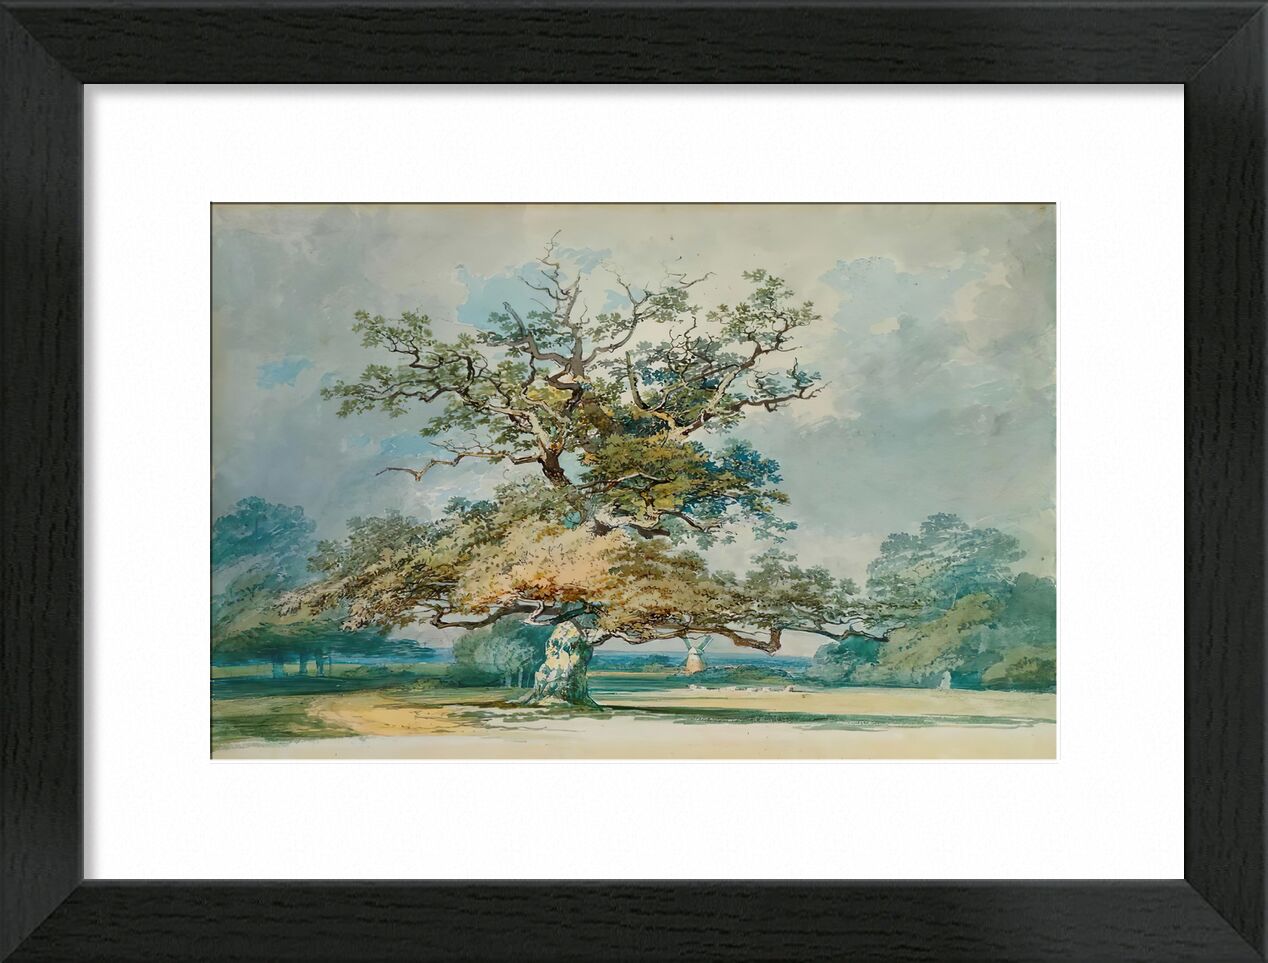 A Landscape with an Old Oak Tree - TURNER desde Bellas artes, Prodi Art, TORNERO, árbol, hojas, paisaje, cielo, Roble